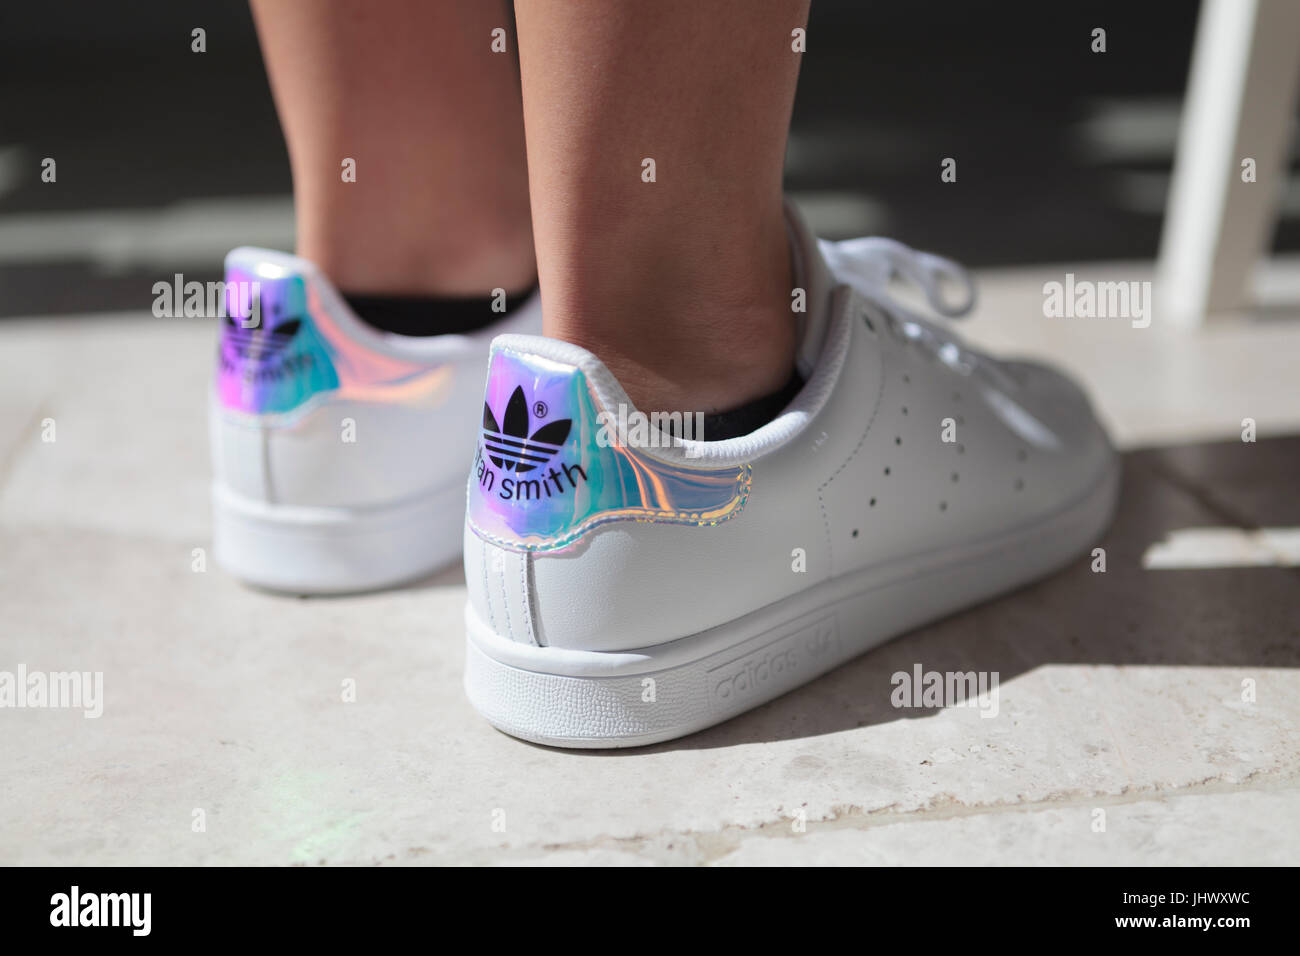 Stan Smith Adidas Trainers on Feet on Ground Stock Photo - Alamy